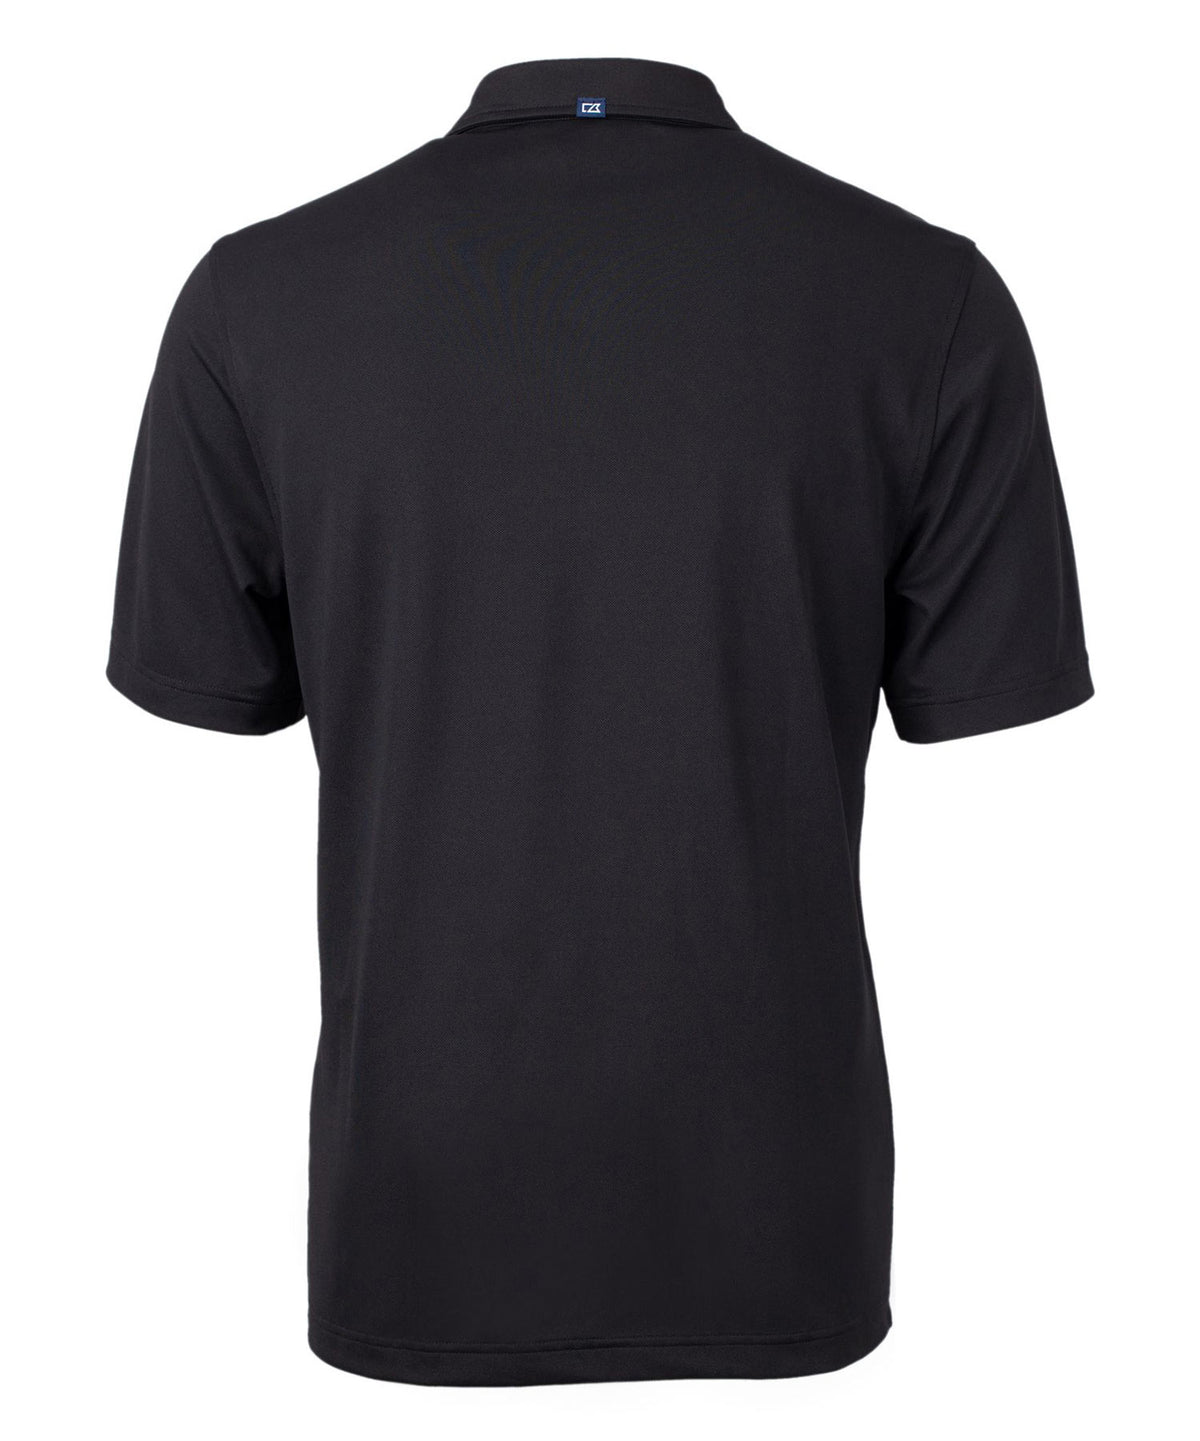 Cutter & Buck University of Missouri Tigers Short Sleeve Polo Knit Shirt, Men's Big & Tall